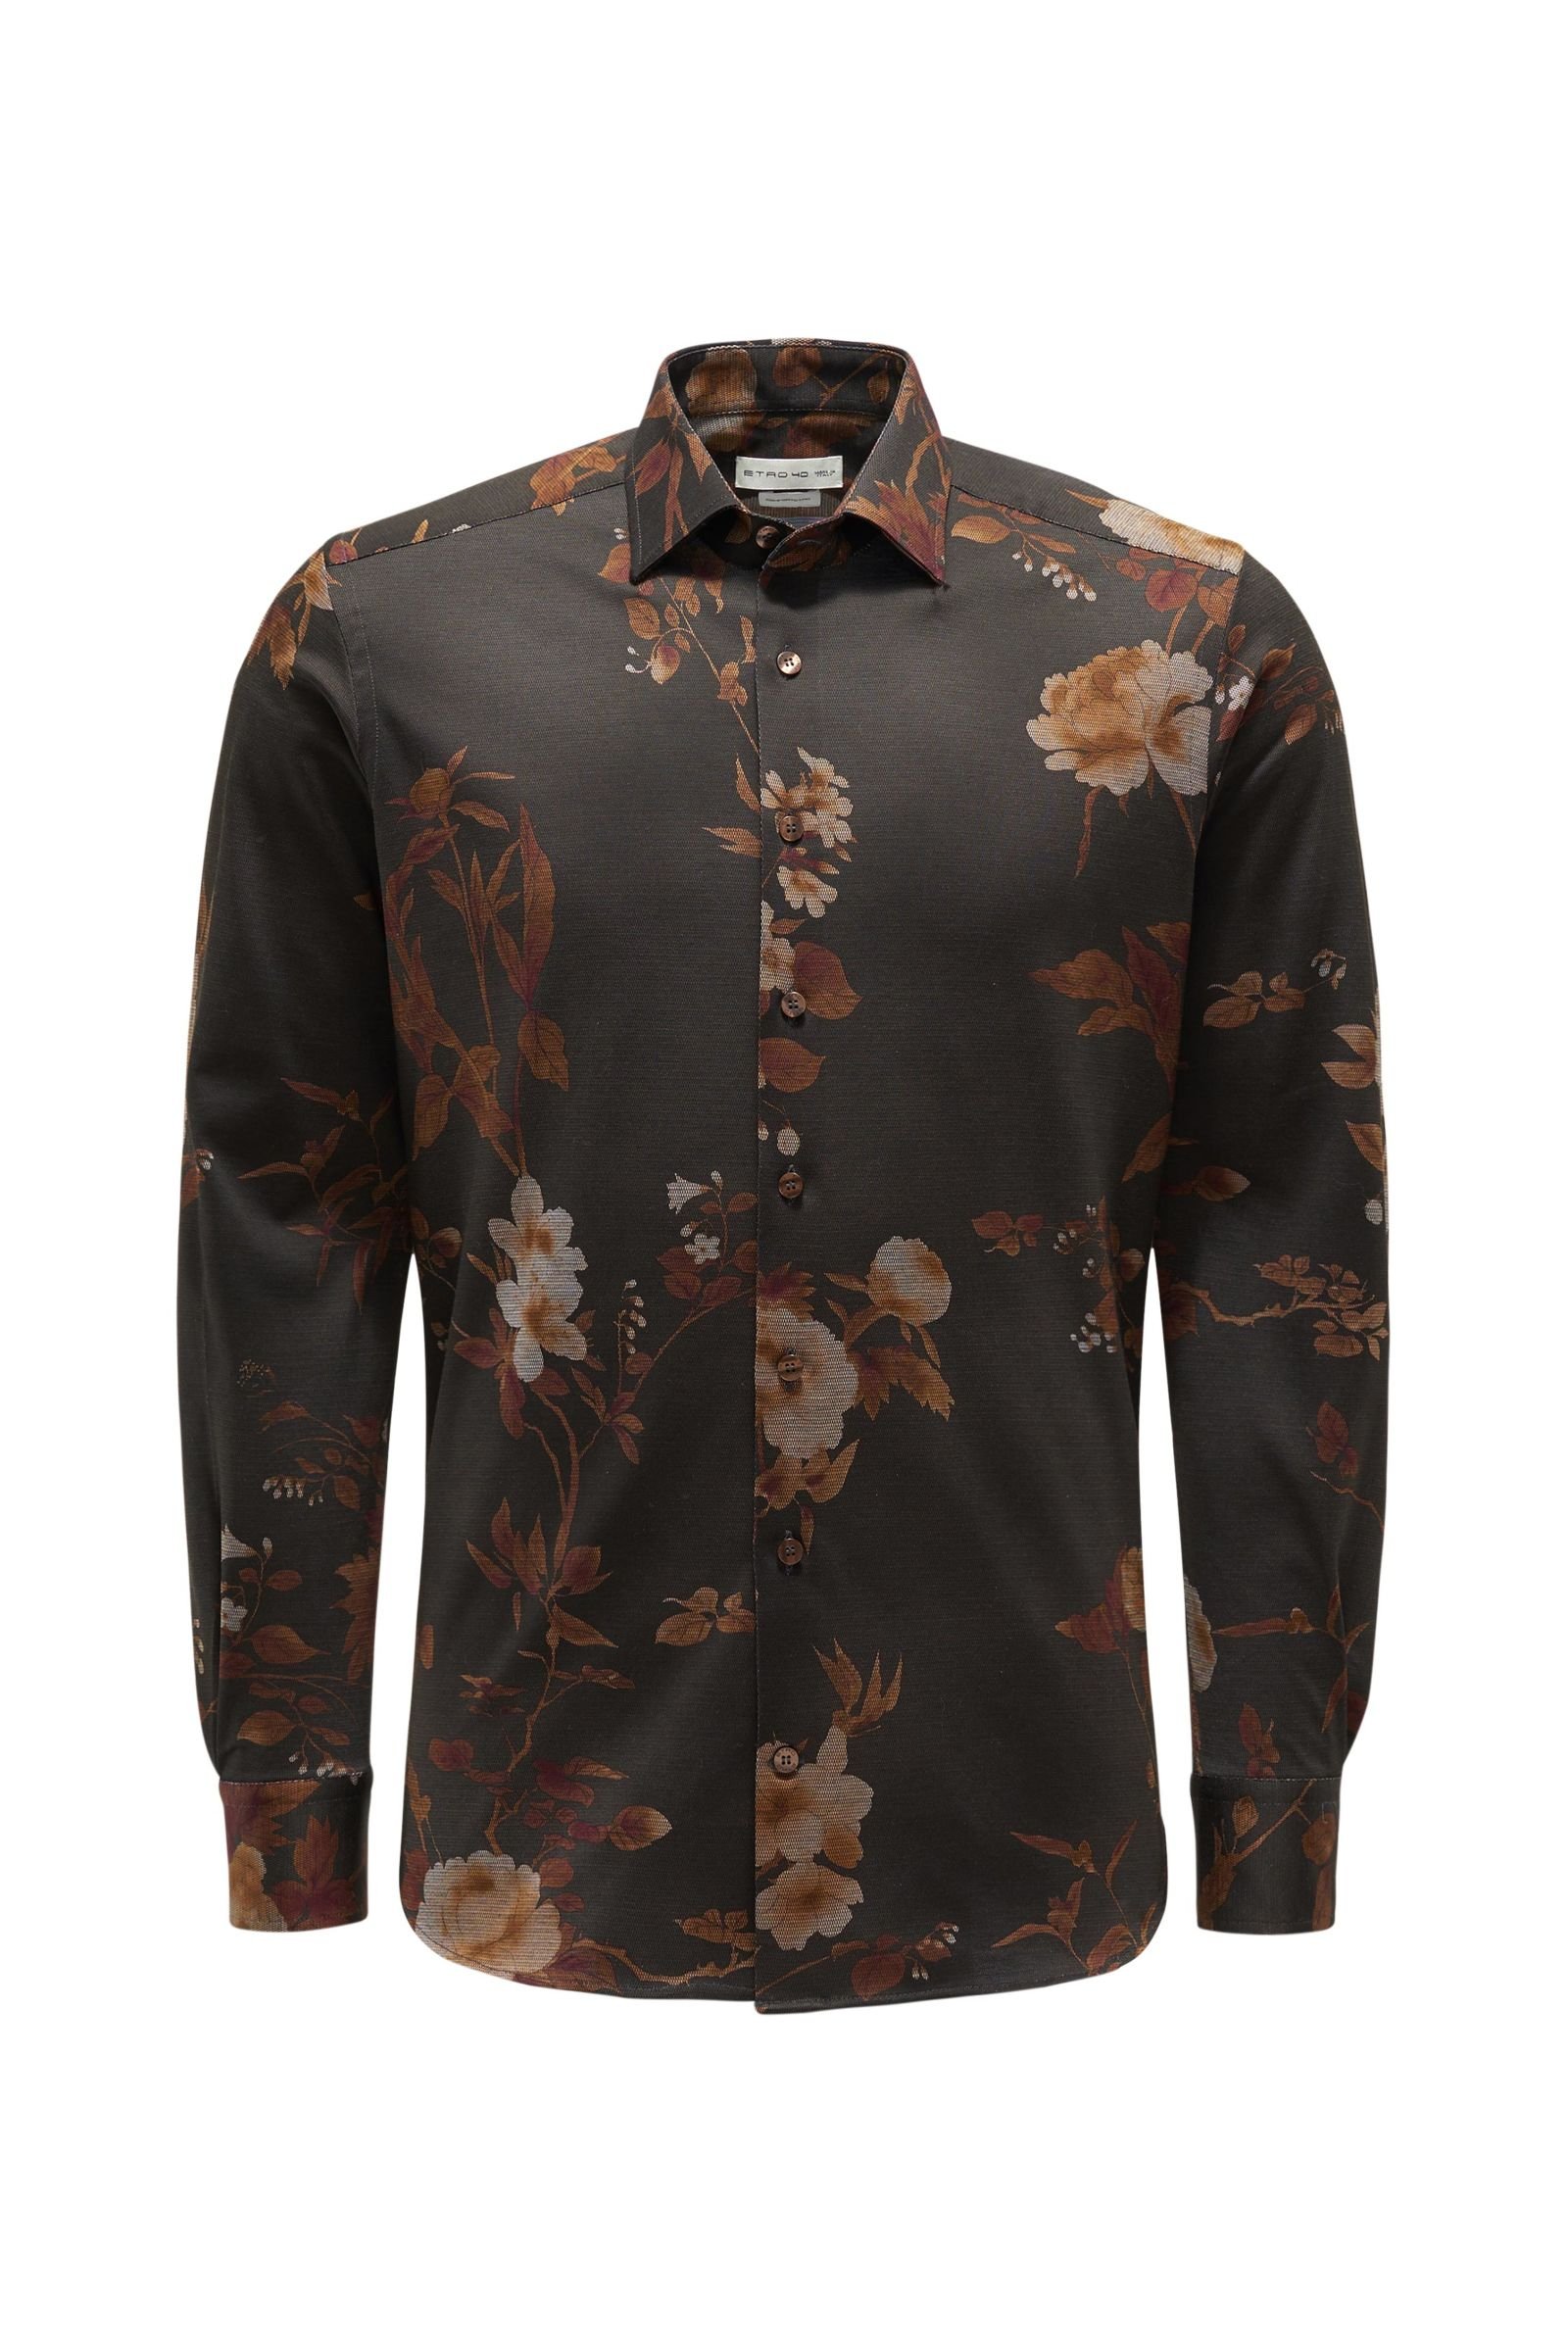 Jersey shirt 'New Warrant' narrow collar dark brown patterned